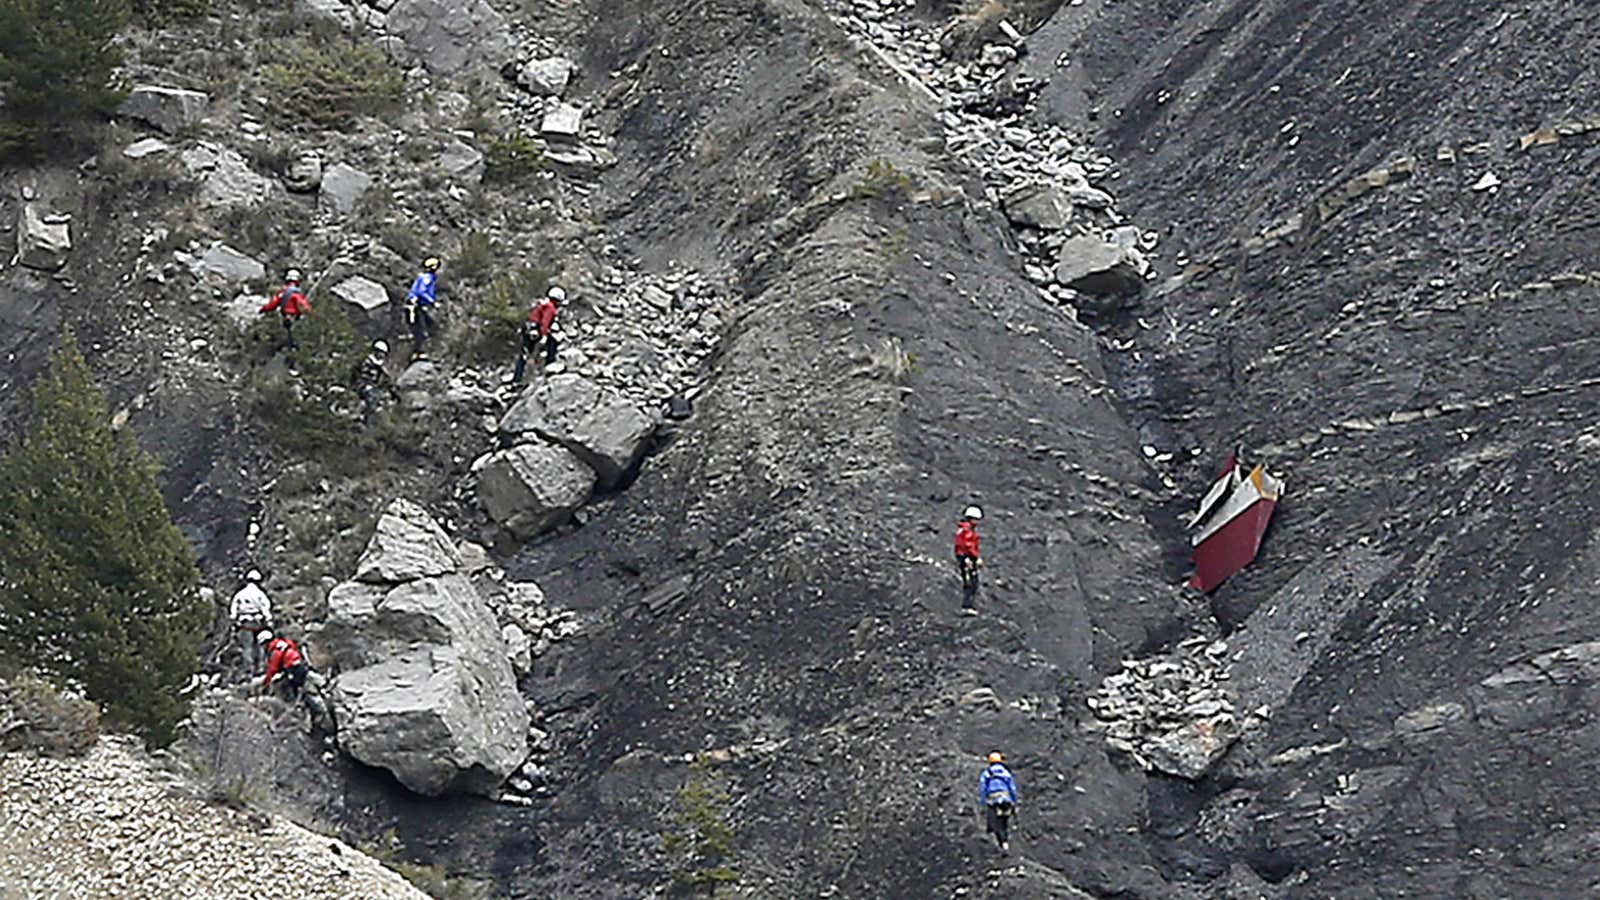 The Germanwings crash site near Seyne-les-Alpes, France.